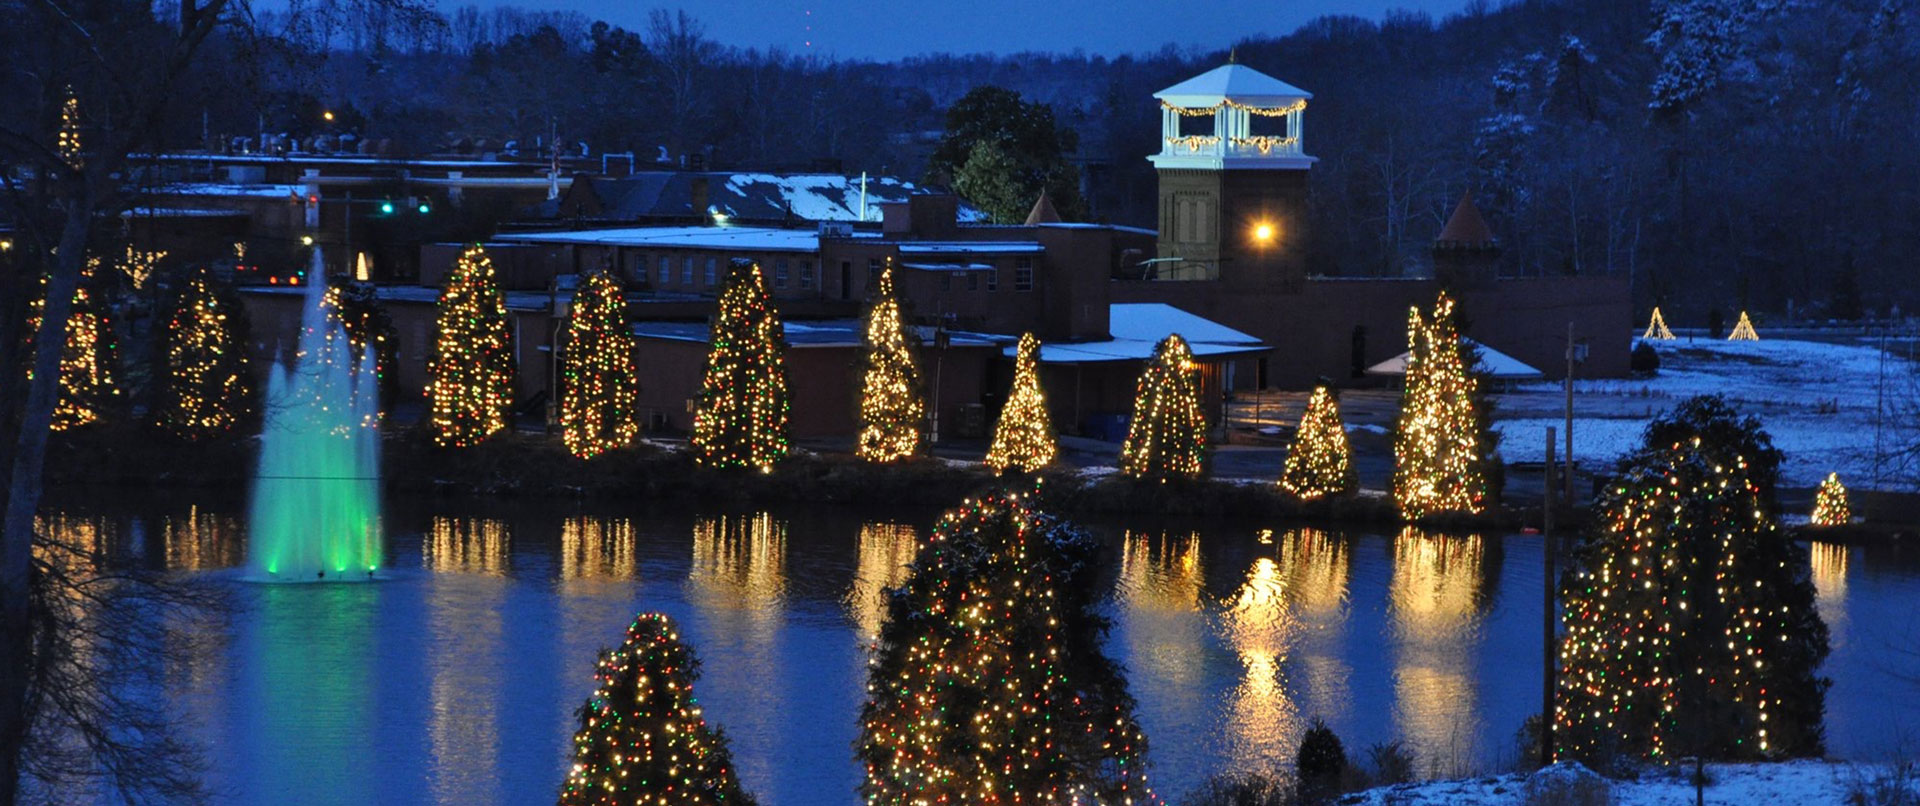 Christmas Town U.S.A.® - McAdenville